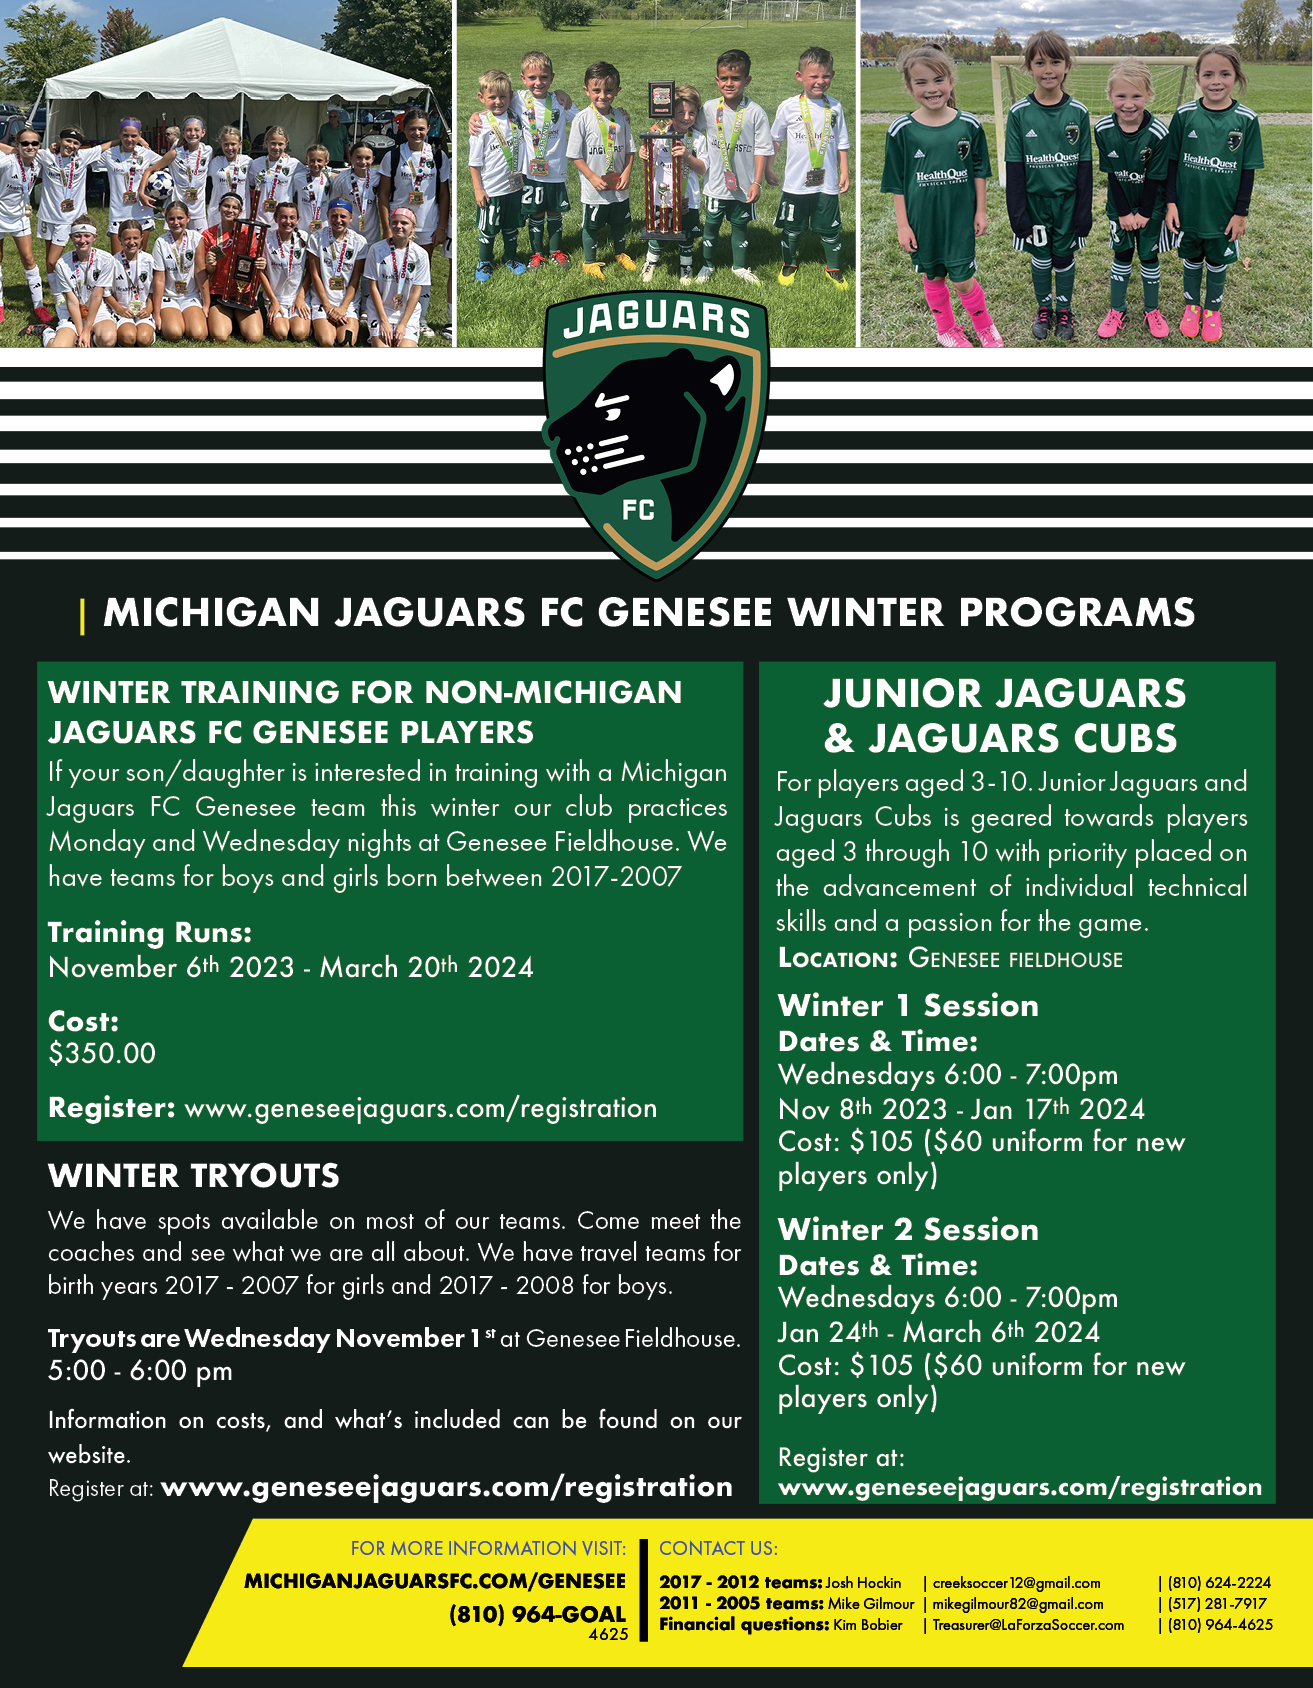 Jichgian Jauars FC Genesee Winter Programs contact us 810-624-2224